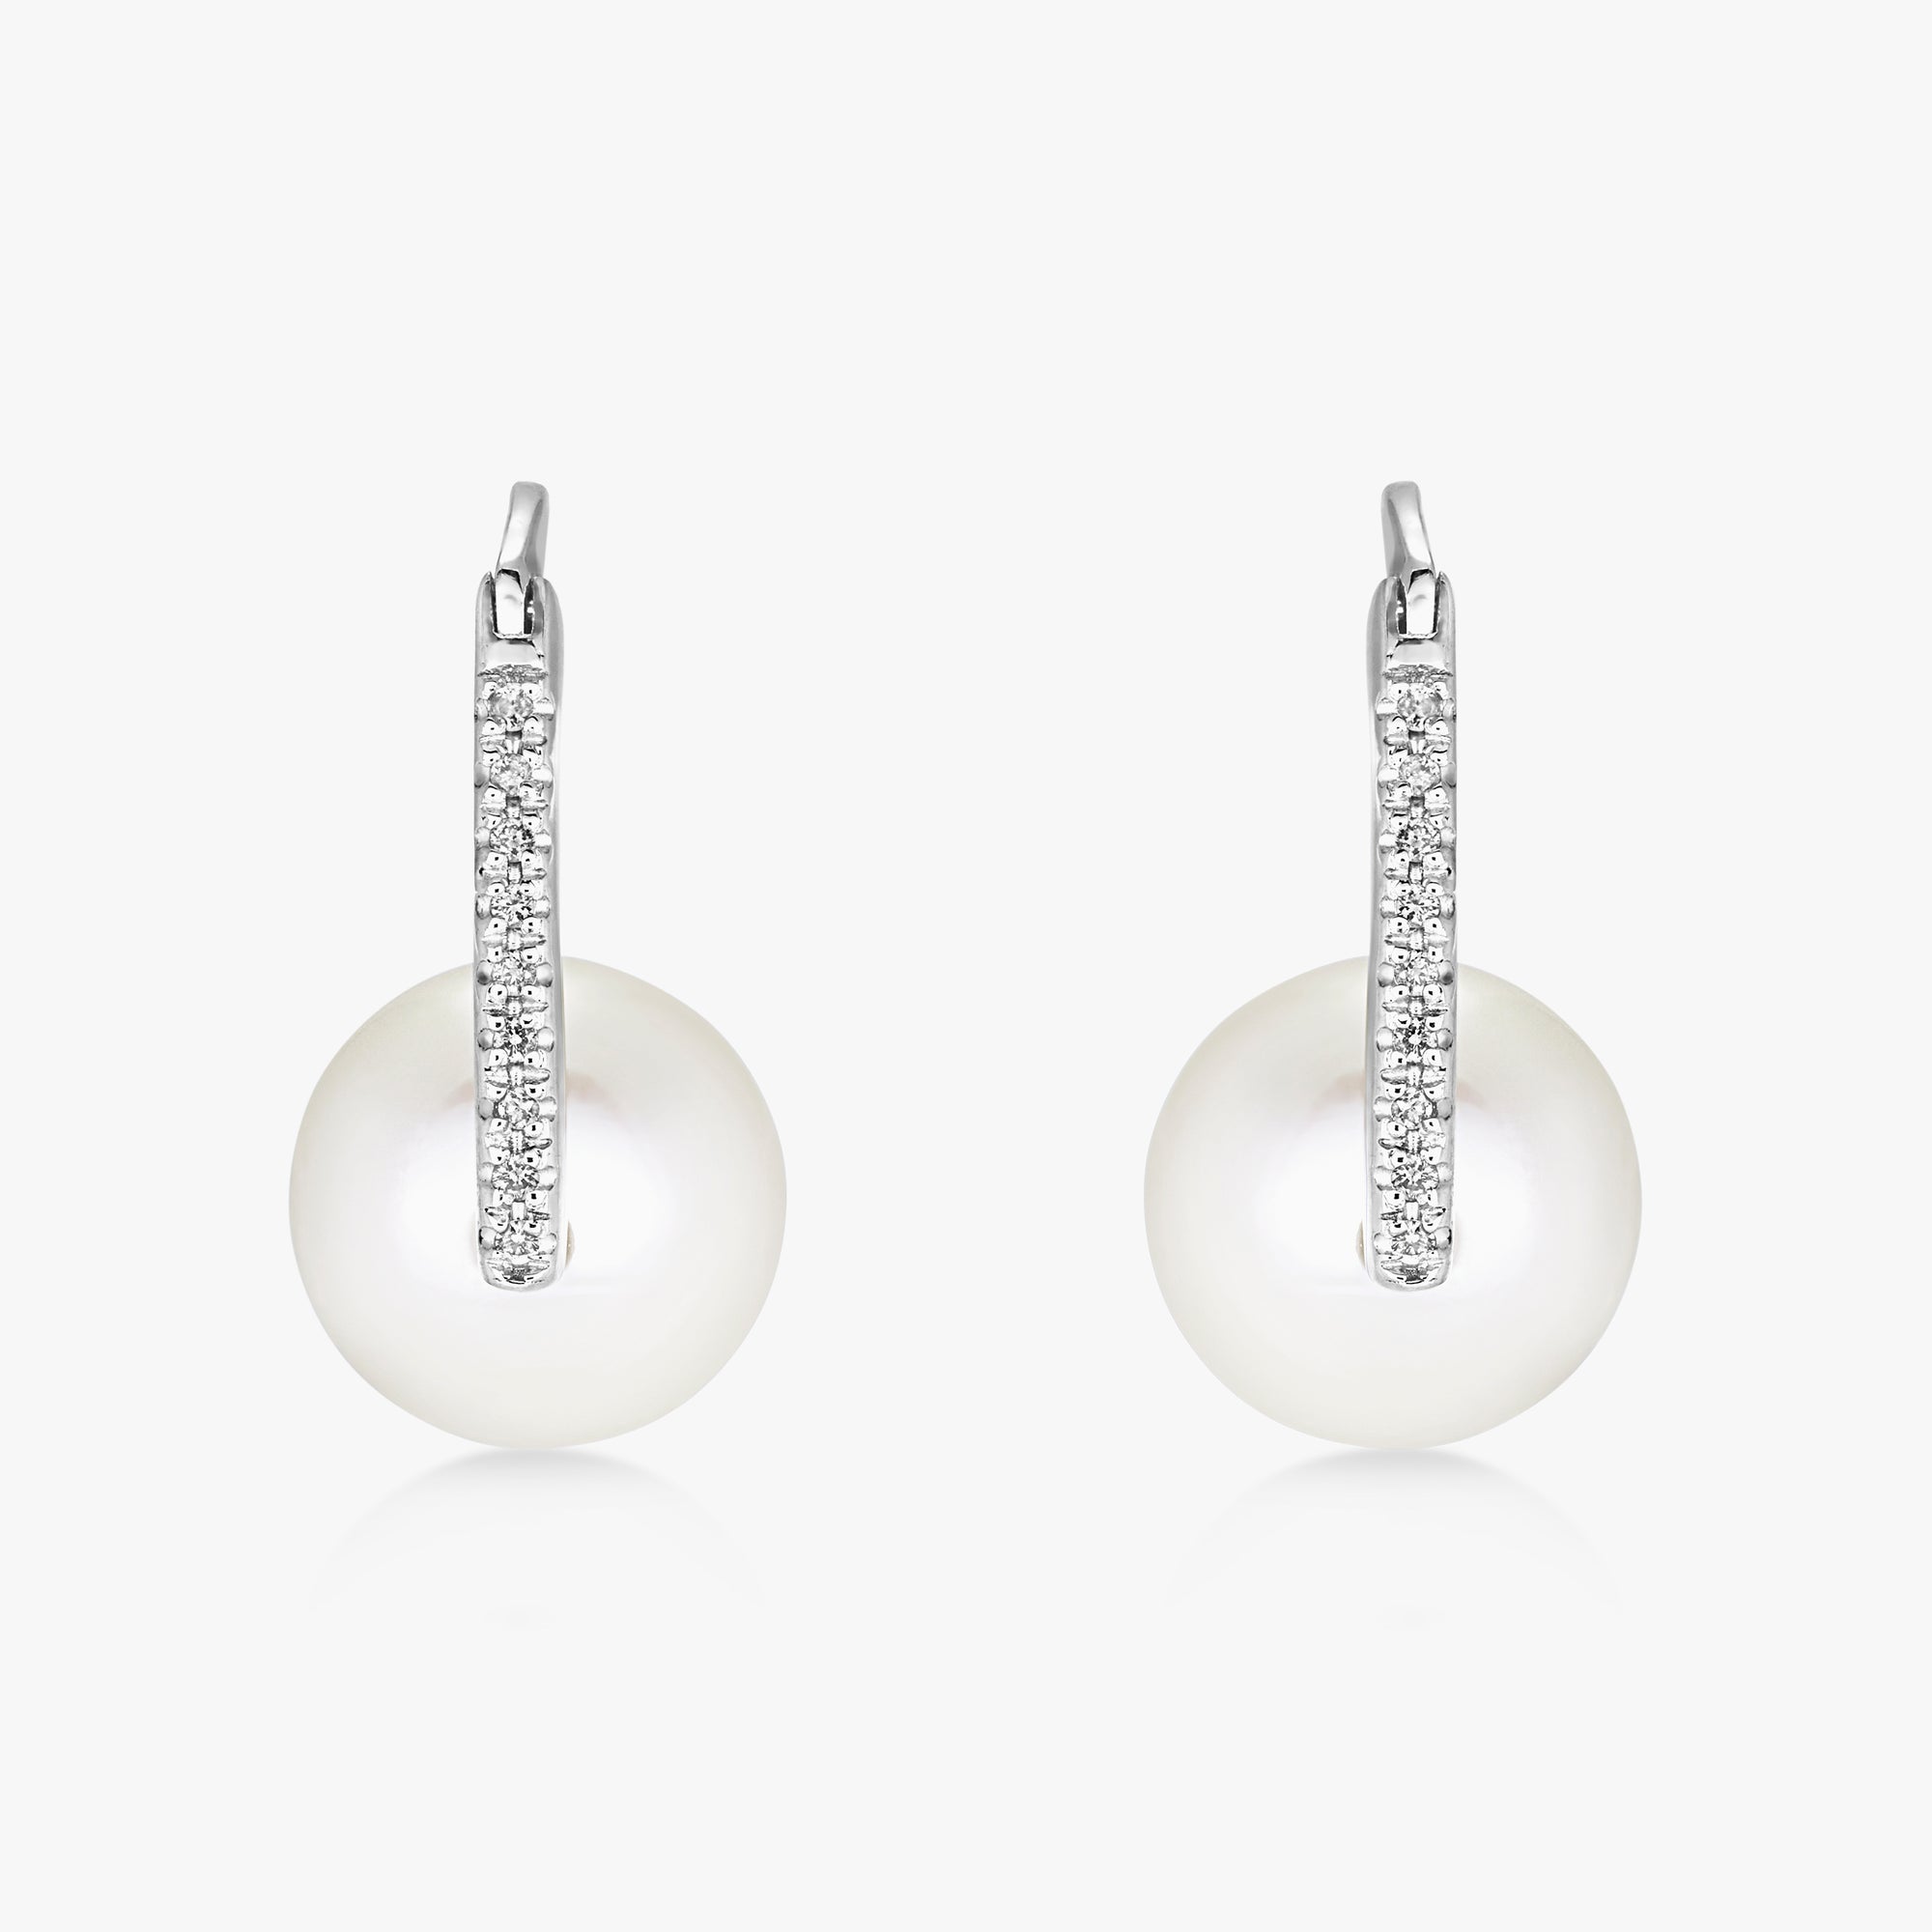 South Sea Pearl Nuovo Diamond Earrings - Carrie K. 